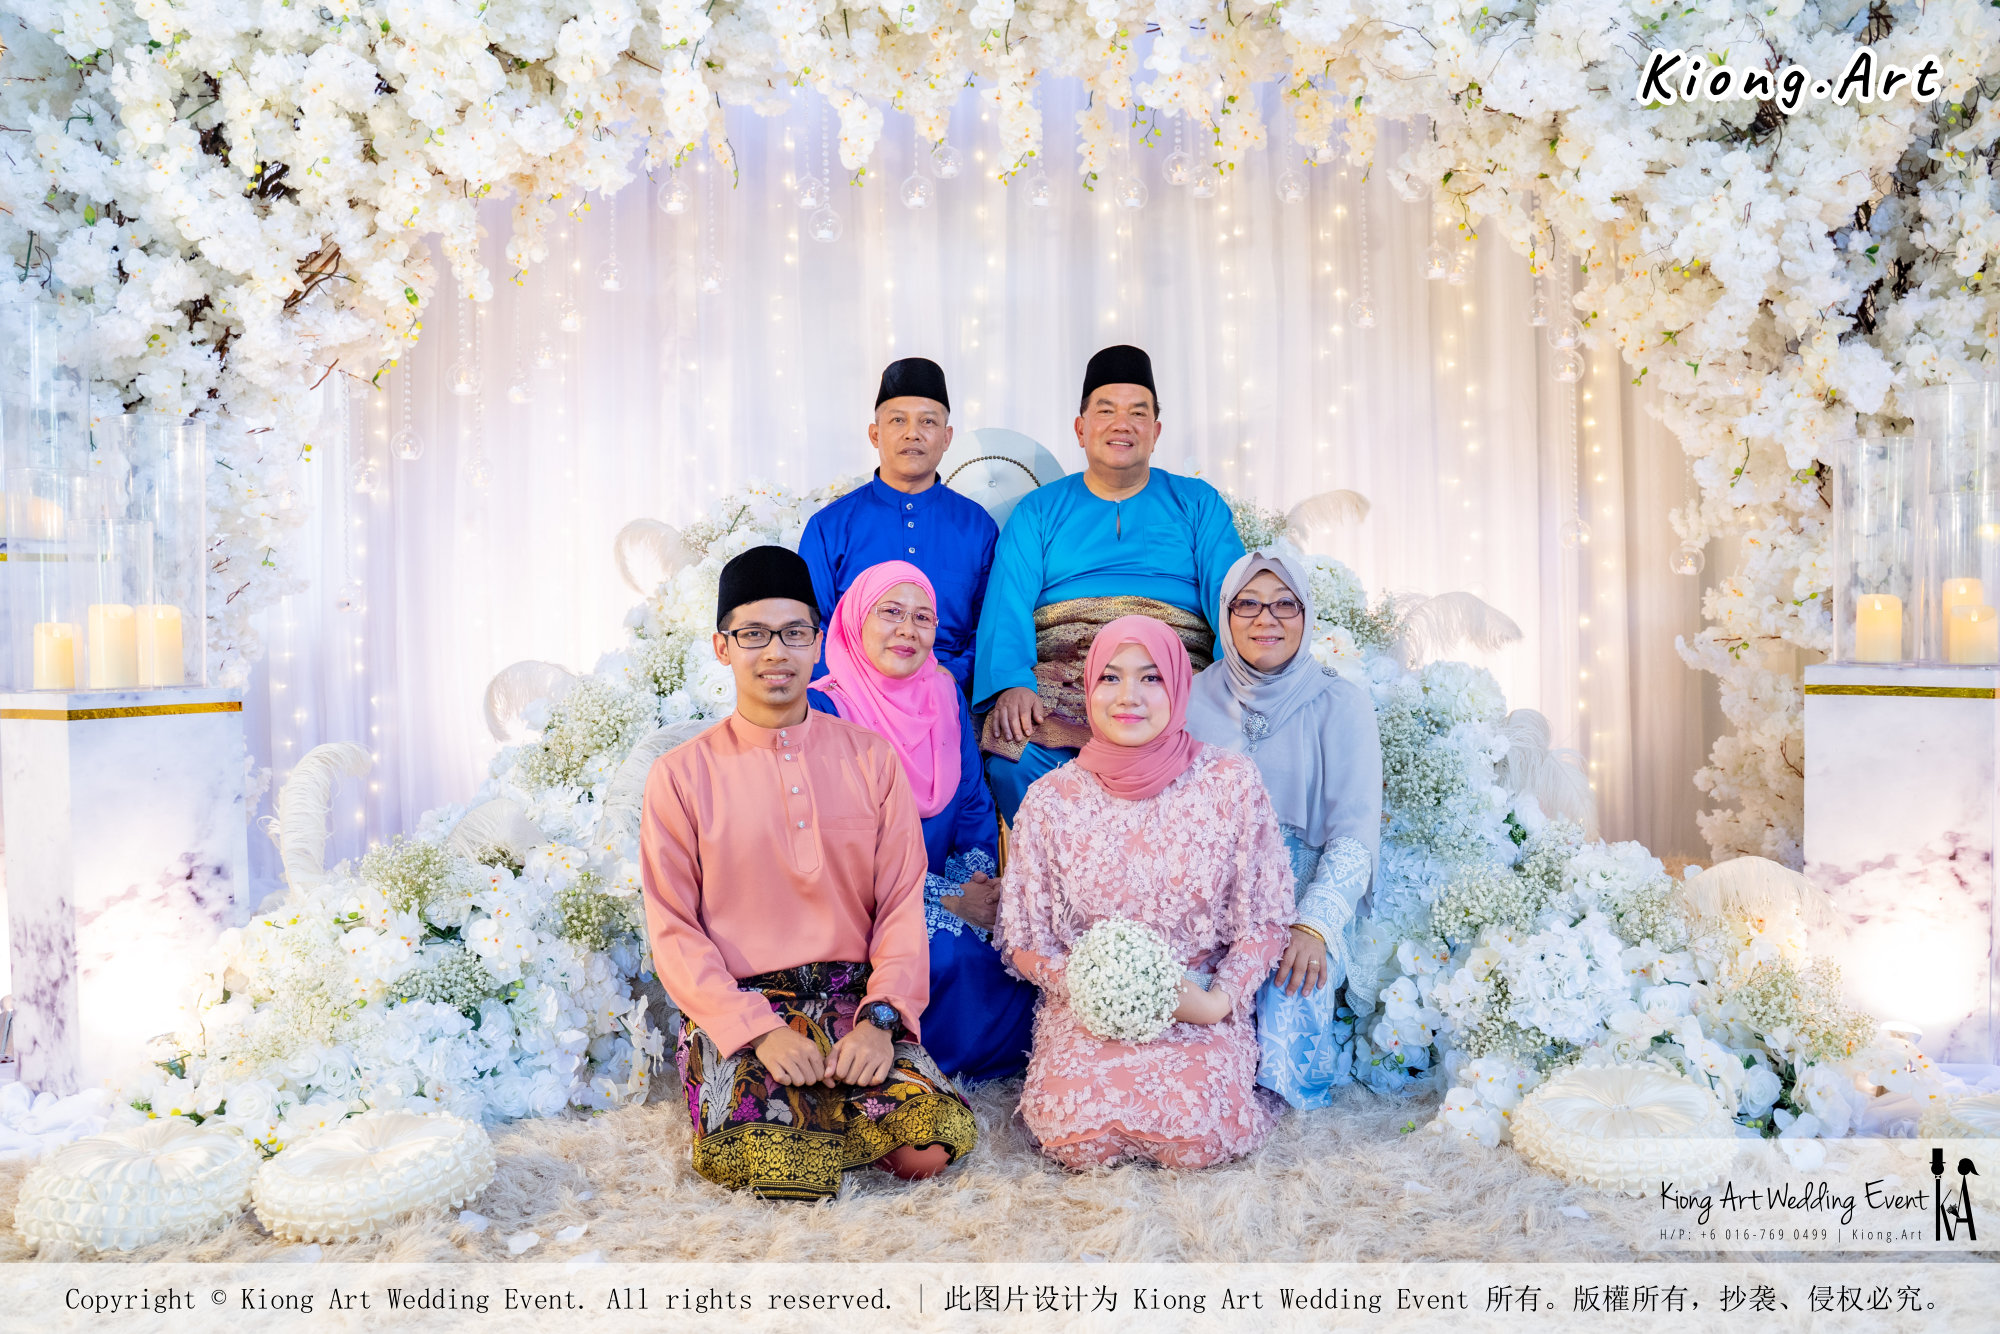 Kuala Lumpur Wedding Event Deco Wedding Planner Kiong Art Wedding Event Malay Wedding Theme Tema Perkahwinan Melayu A01-024